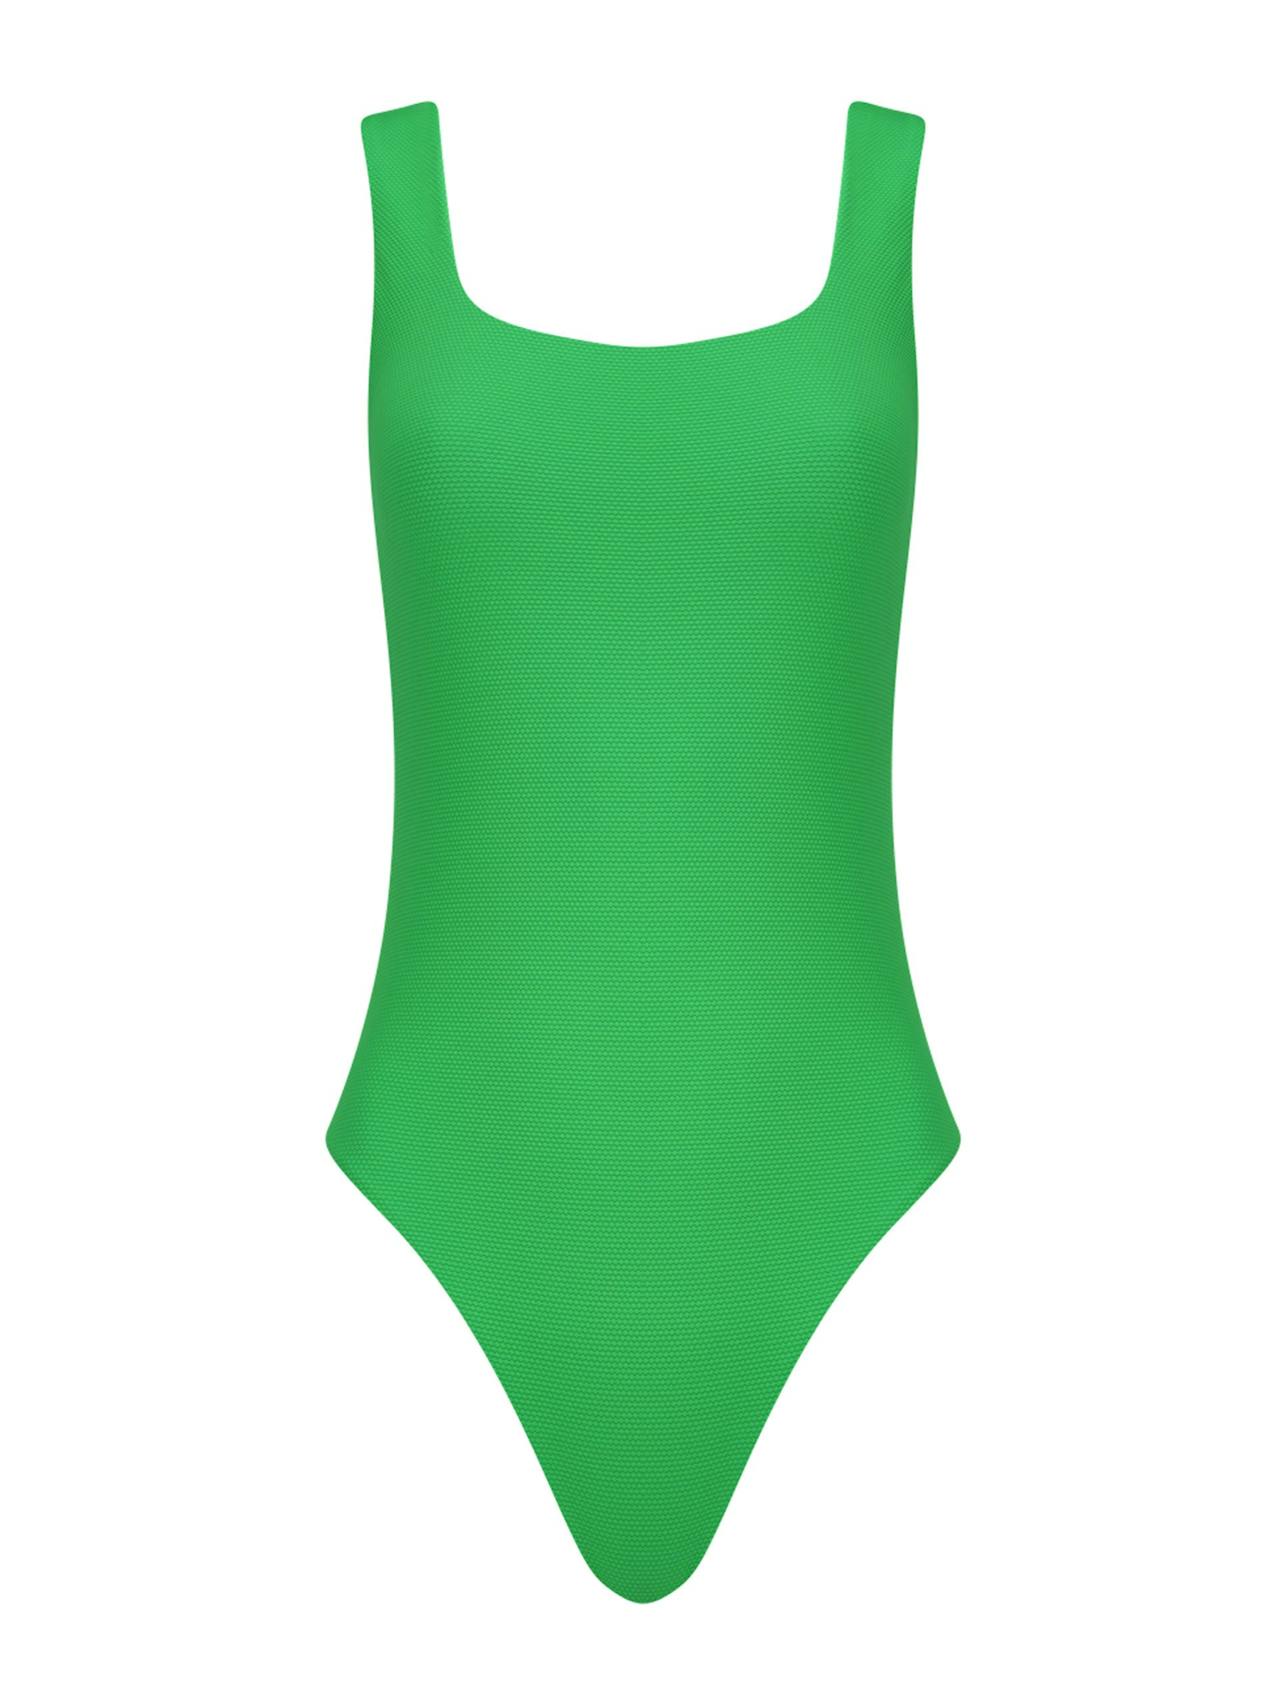 The Poppy (high leg) swimsuit in bright green